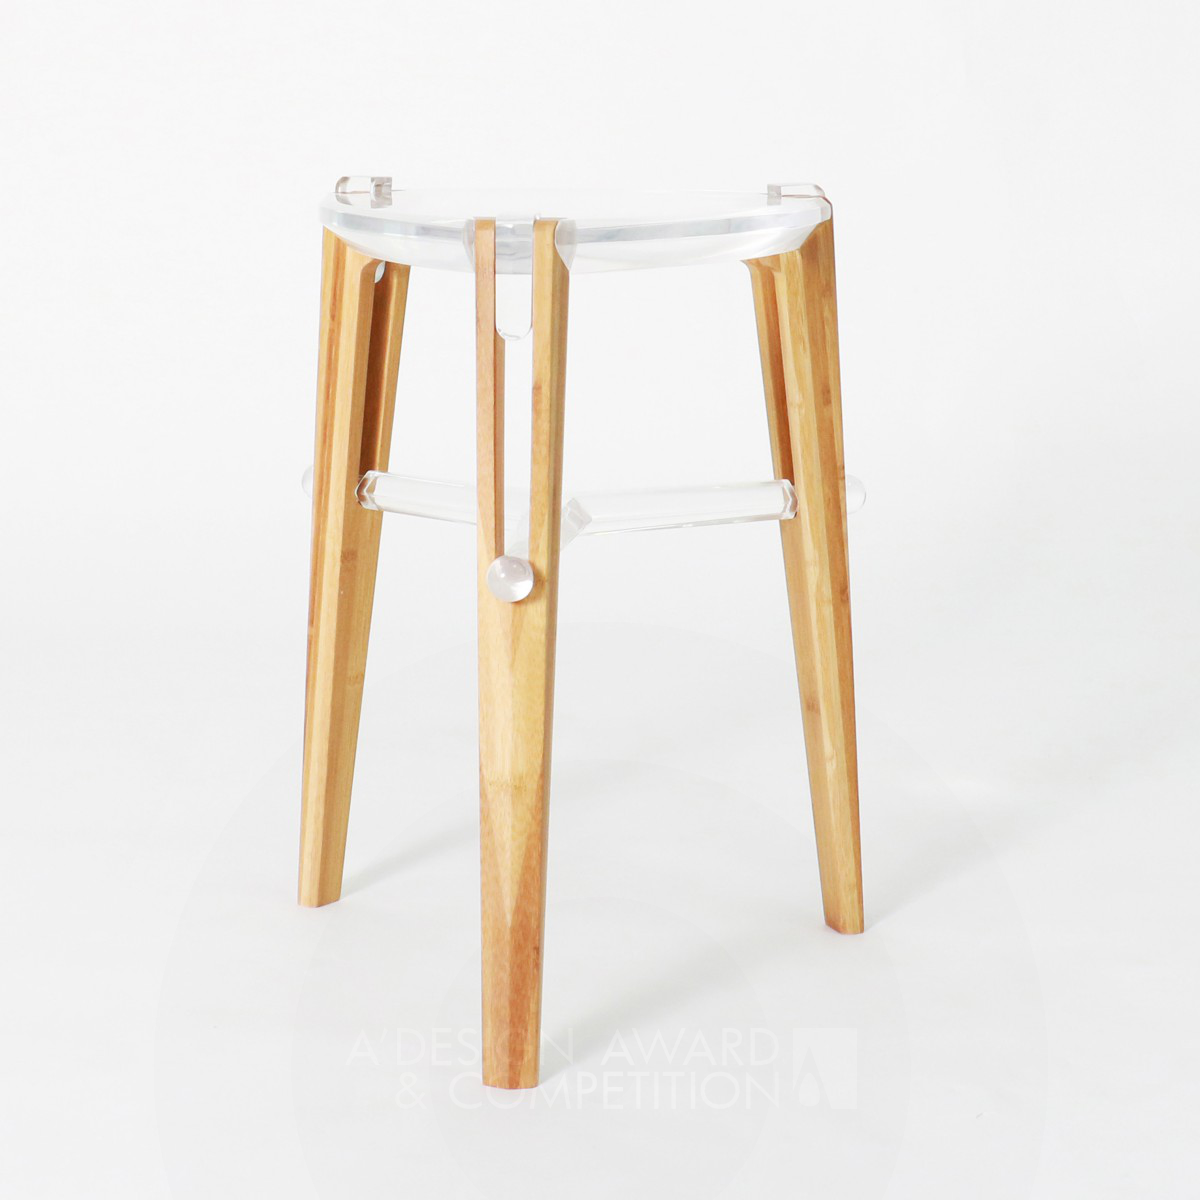 V Stool Self Assembled Seat by Le Xu Silver Furniture Design Award Winner 2022 